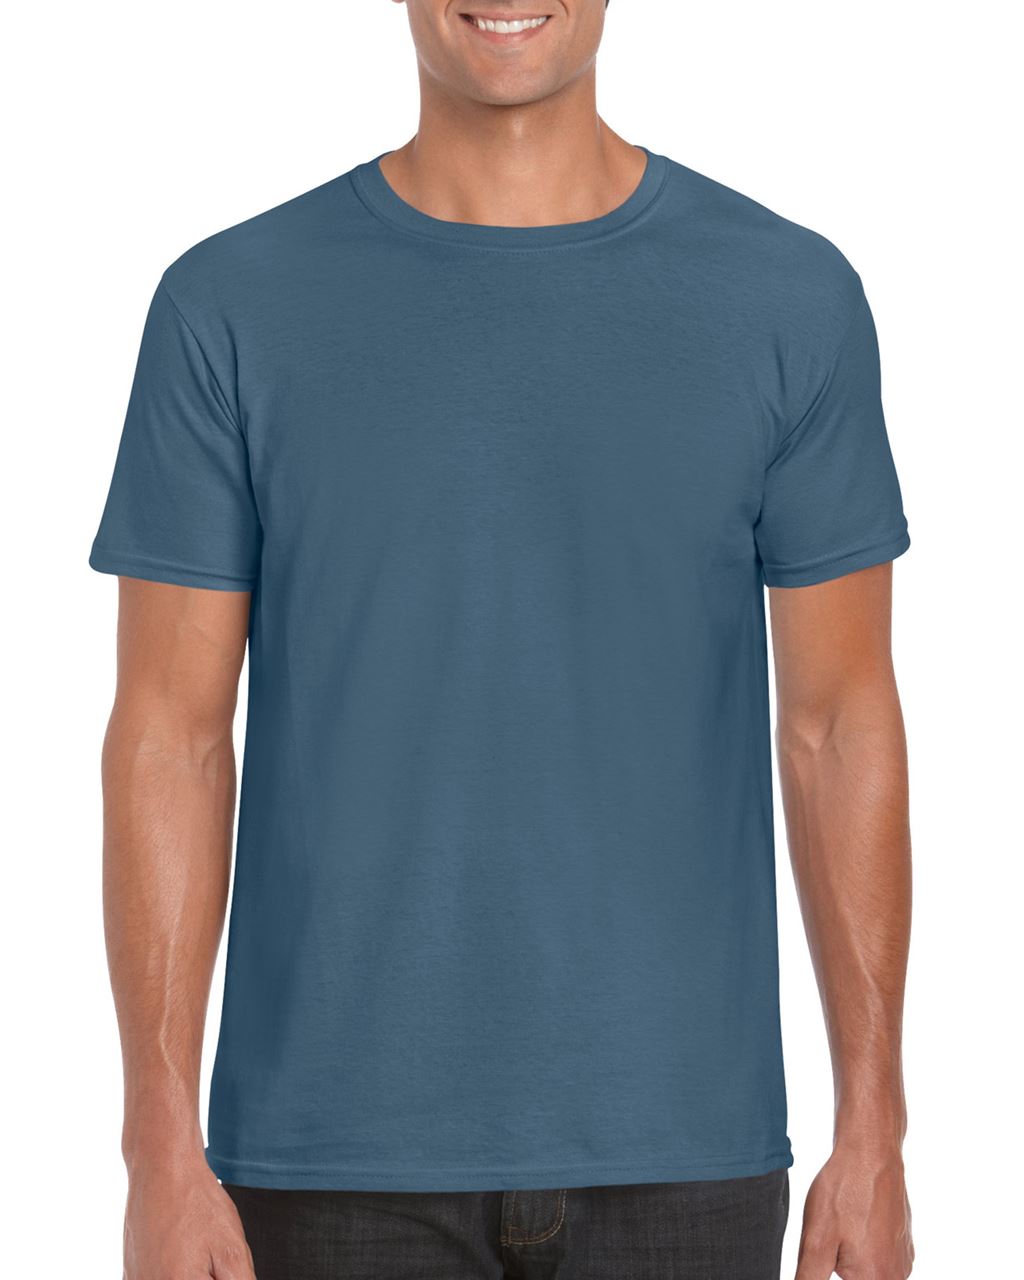 Soft Adult T-Shirts, Gildan 64000 Short Sleeve Ringspun